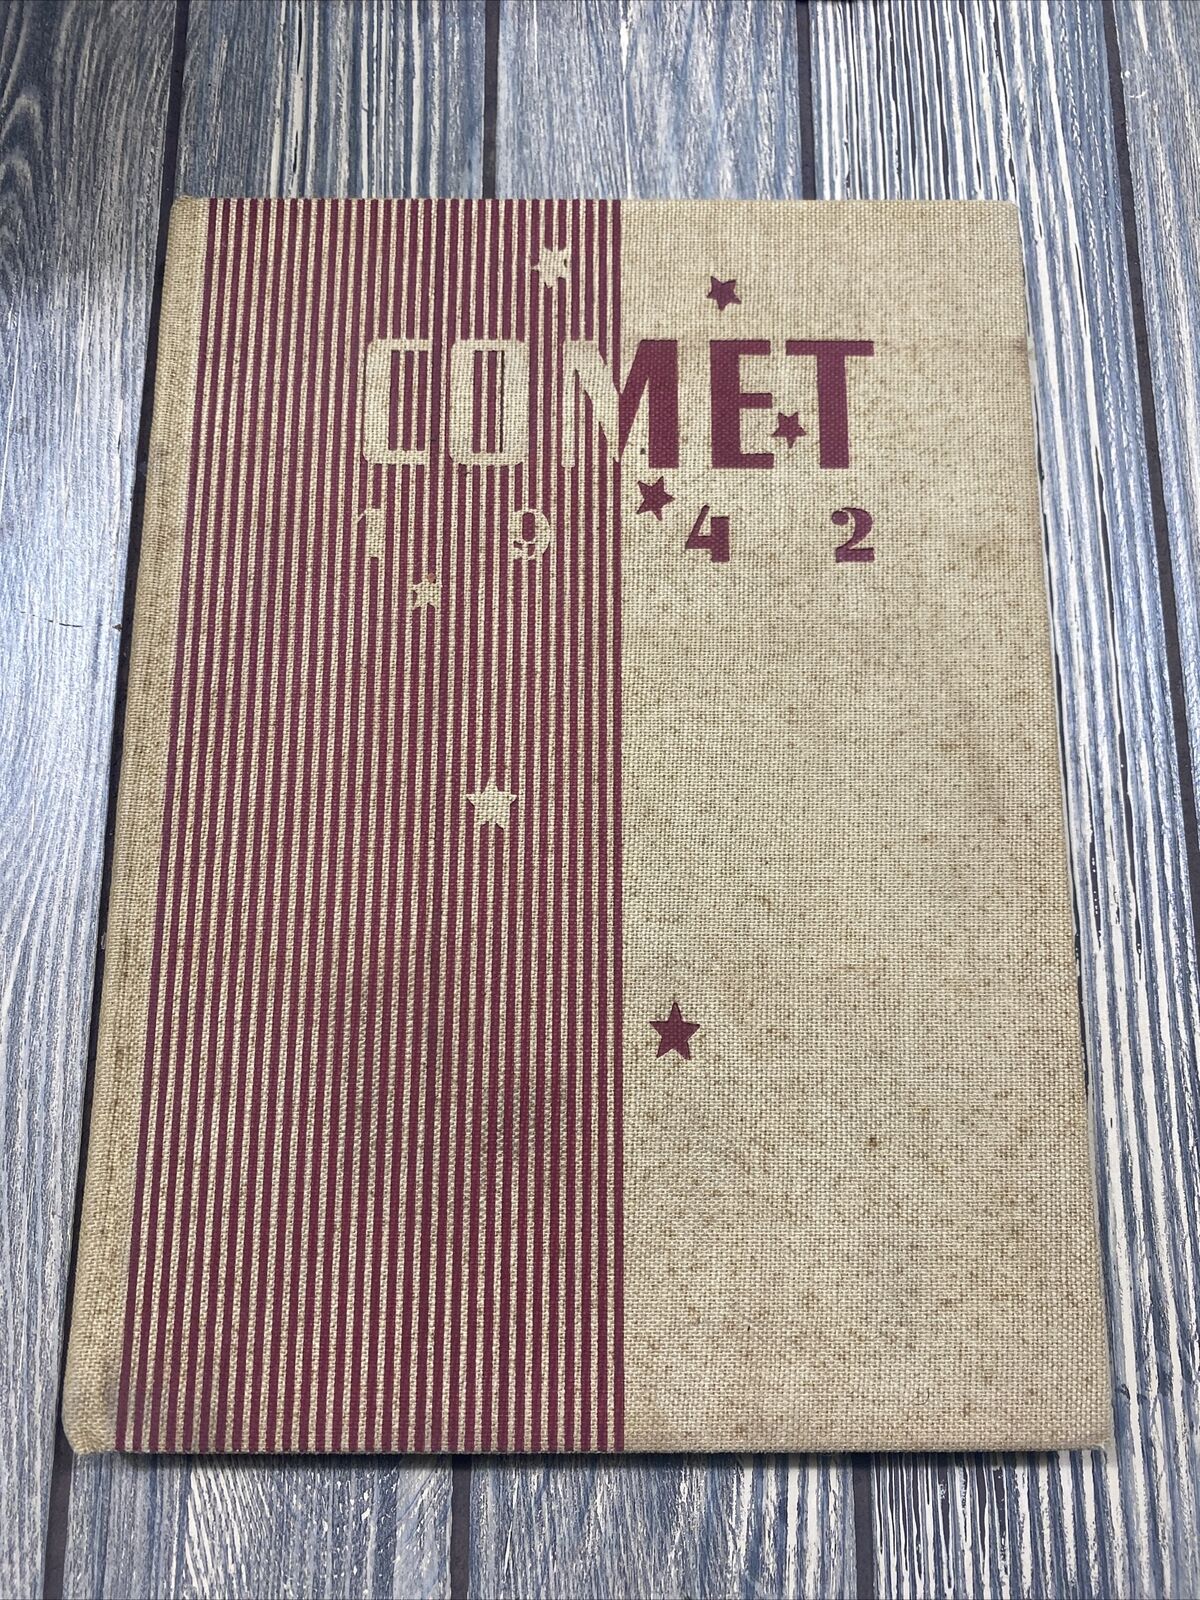 Vintage The Comet High School Year Book 1942 Bellevue Ohio 